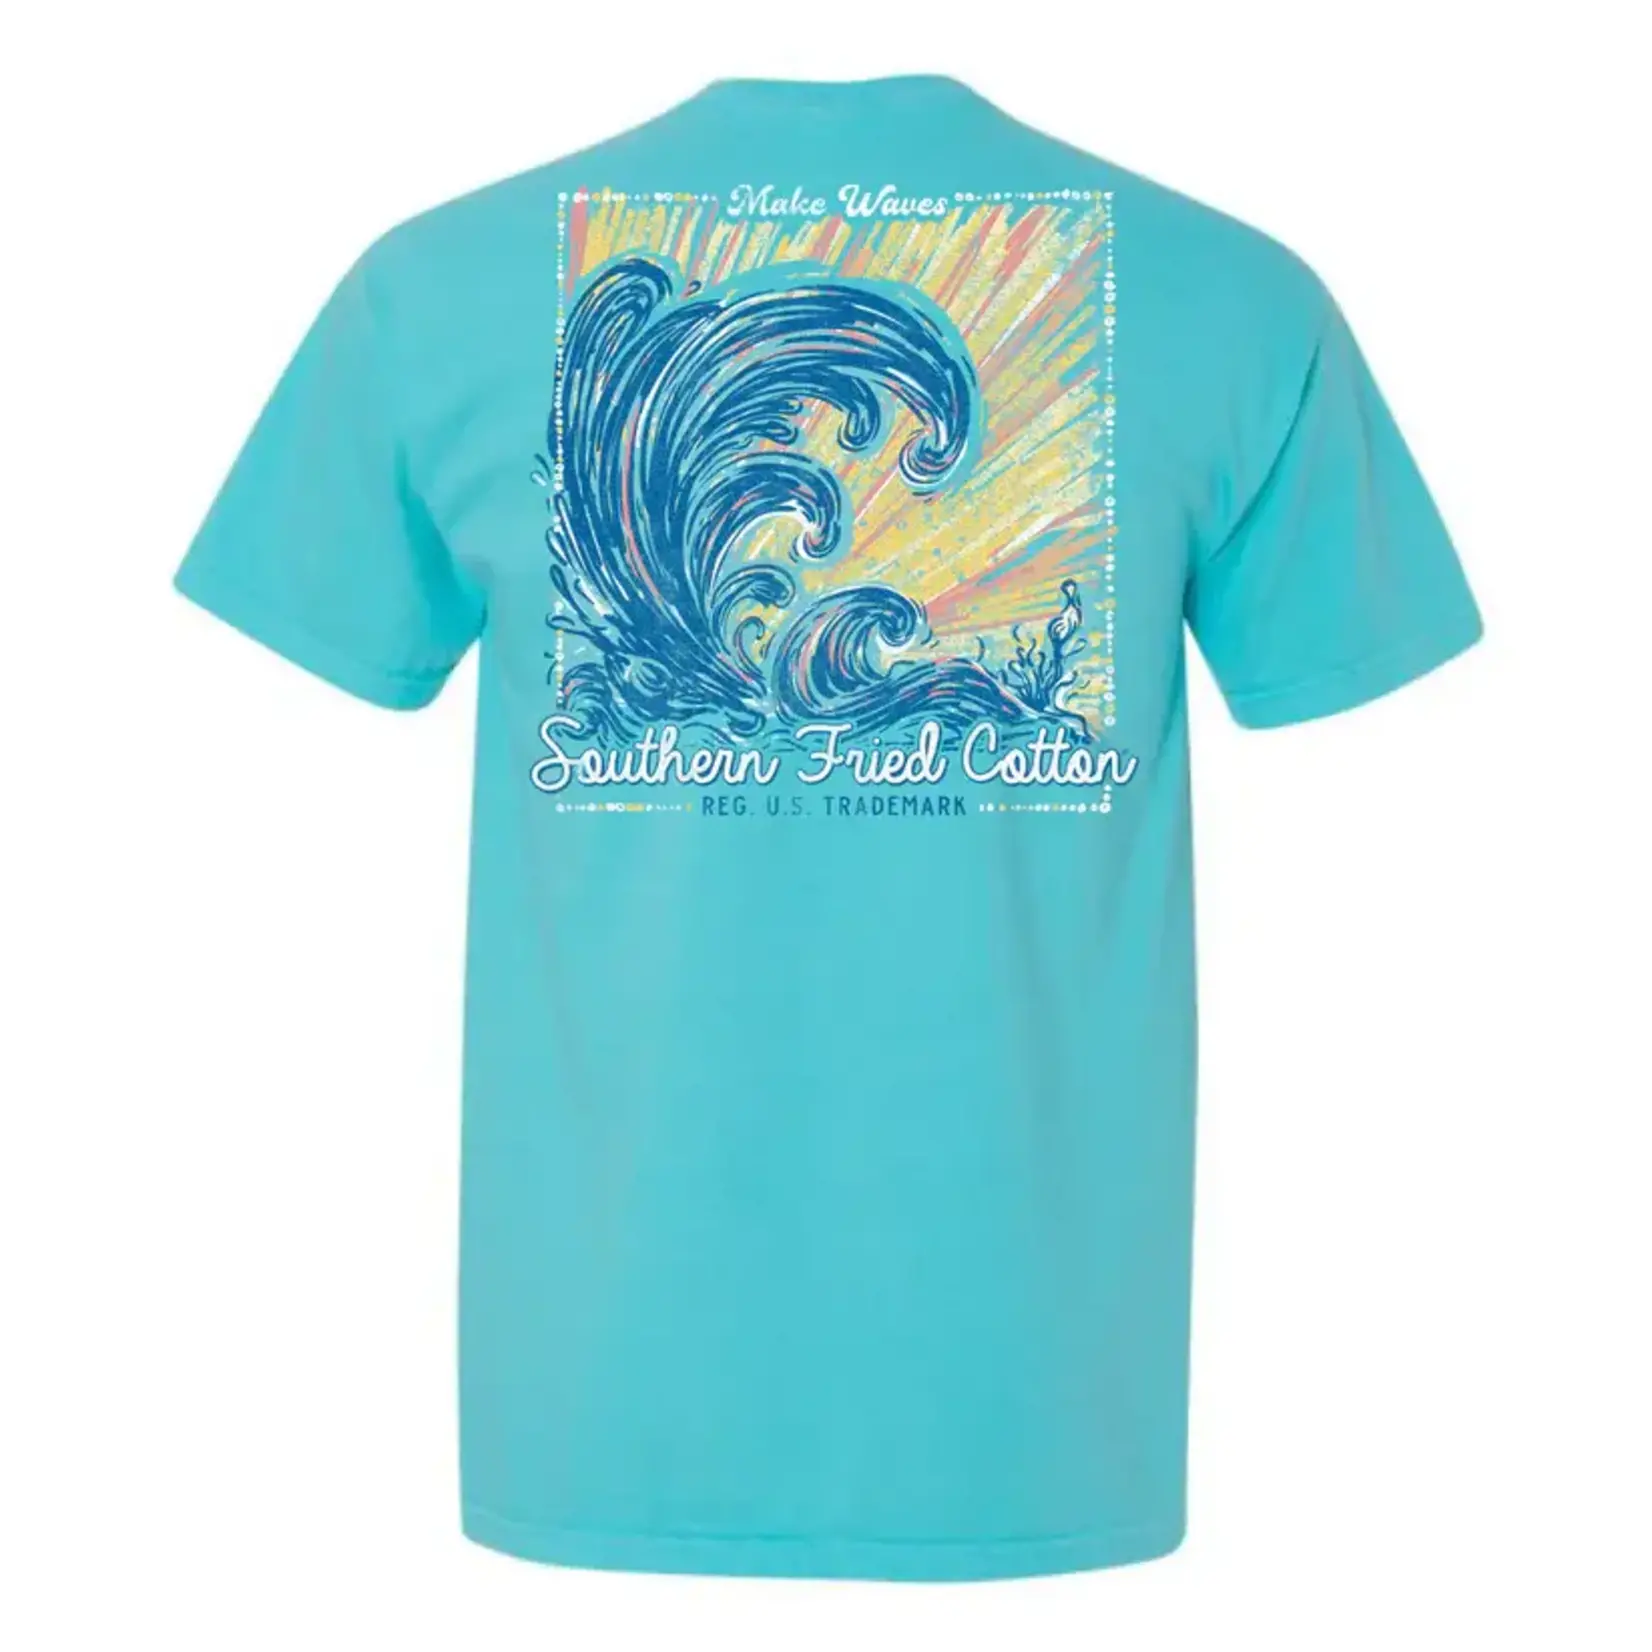 Southern Fried Cotton Southern Fried Cotton Women's Make Waves S/S TEE Shirt